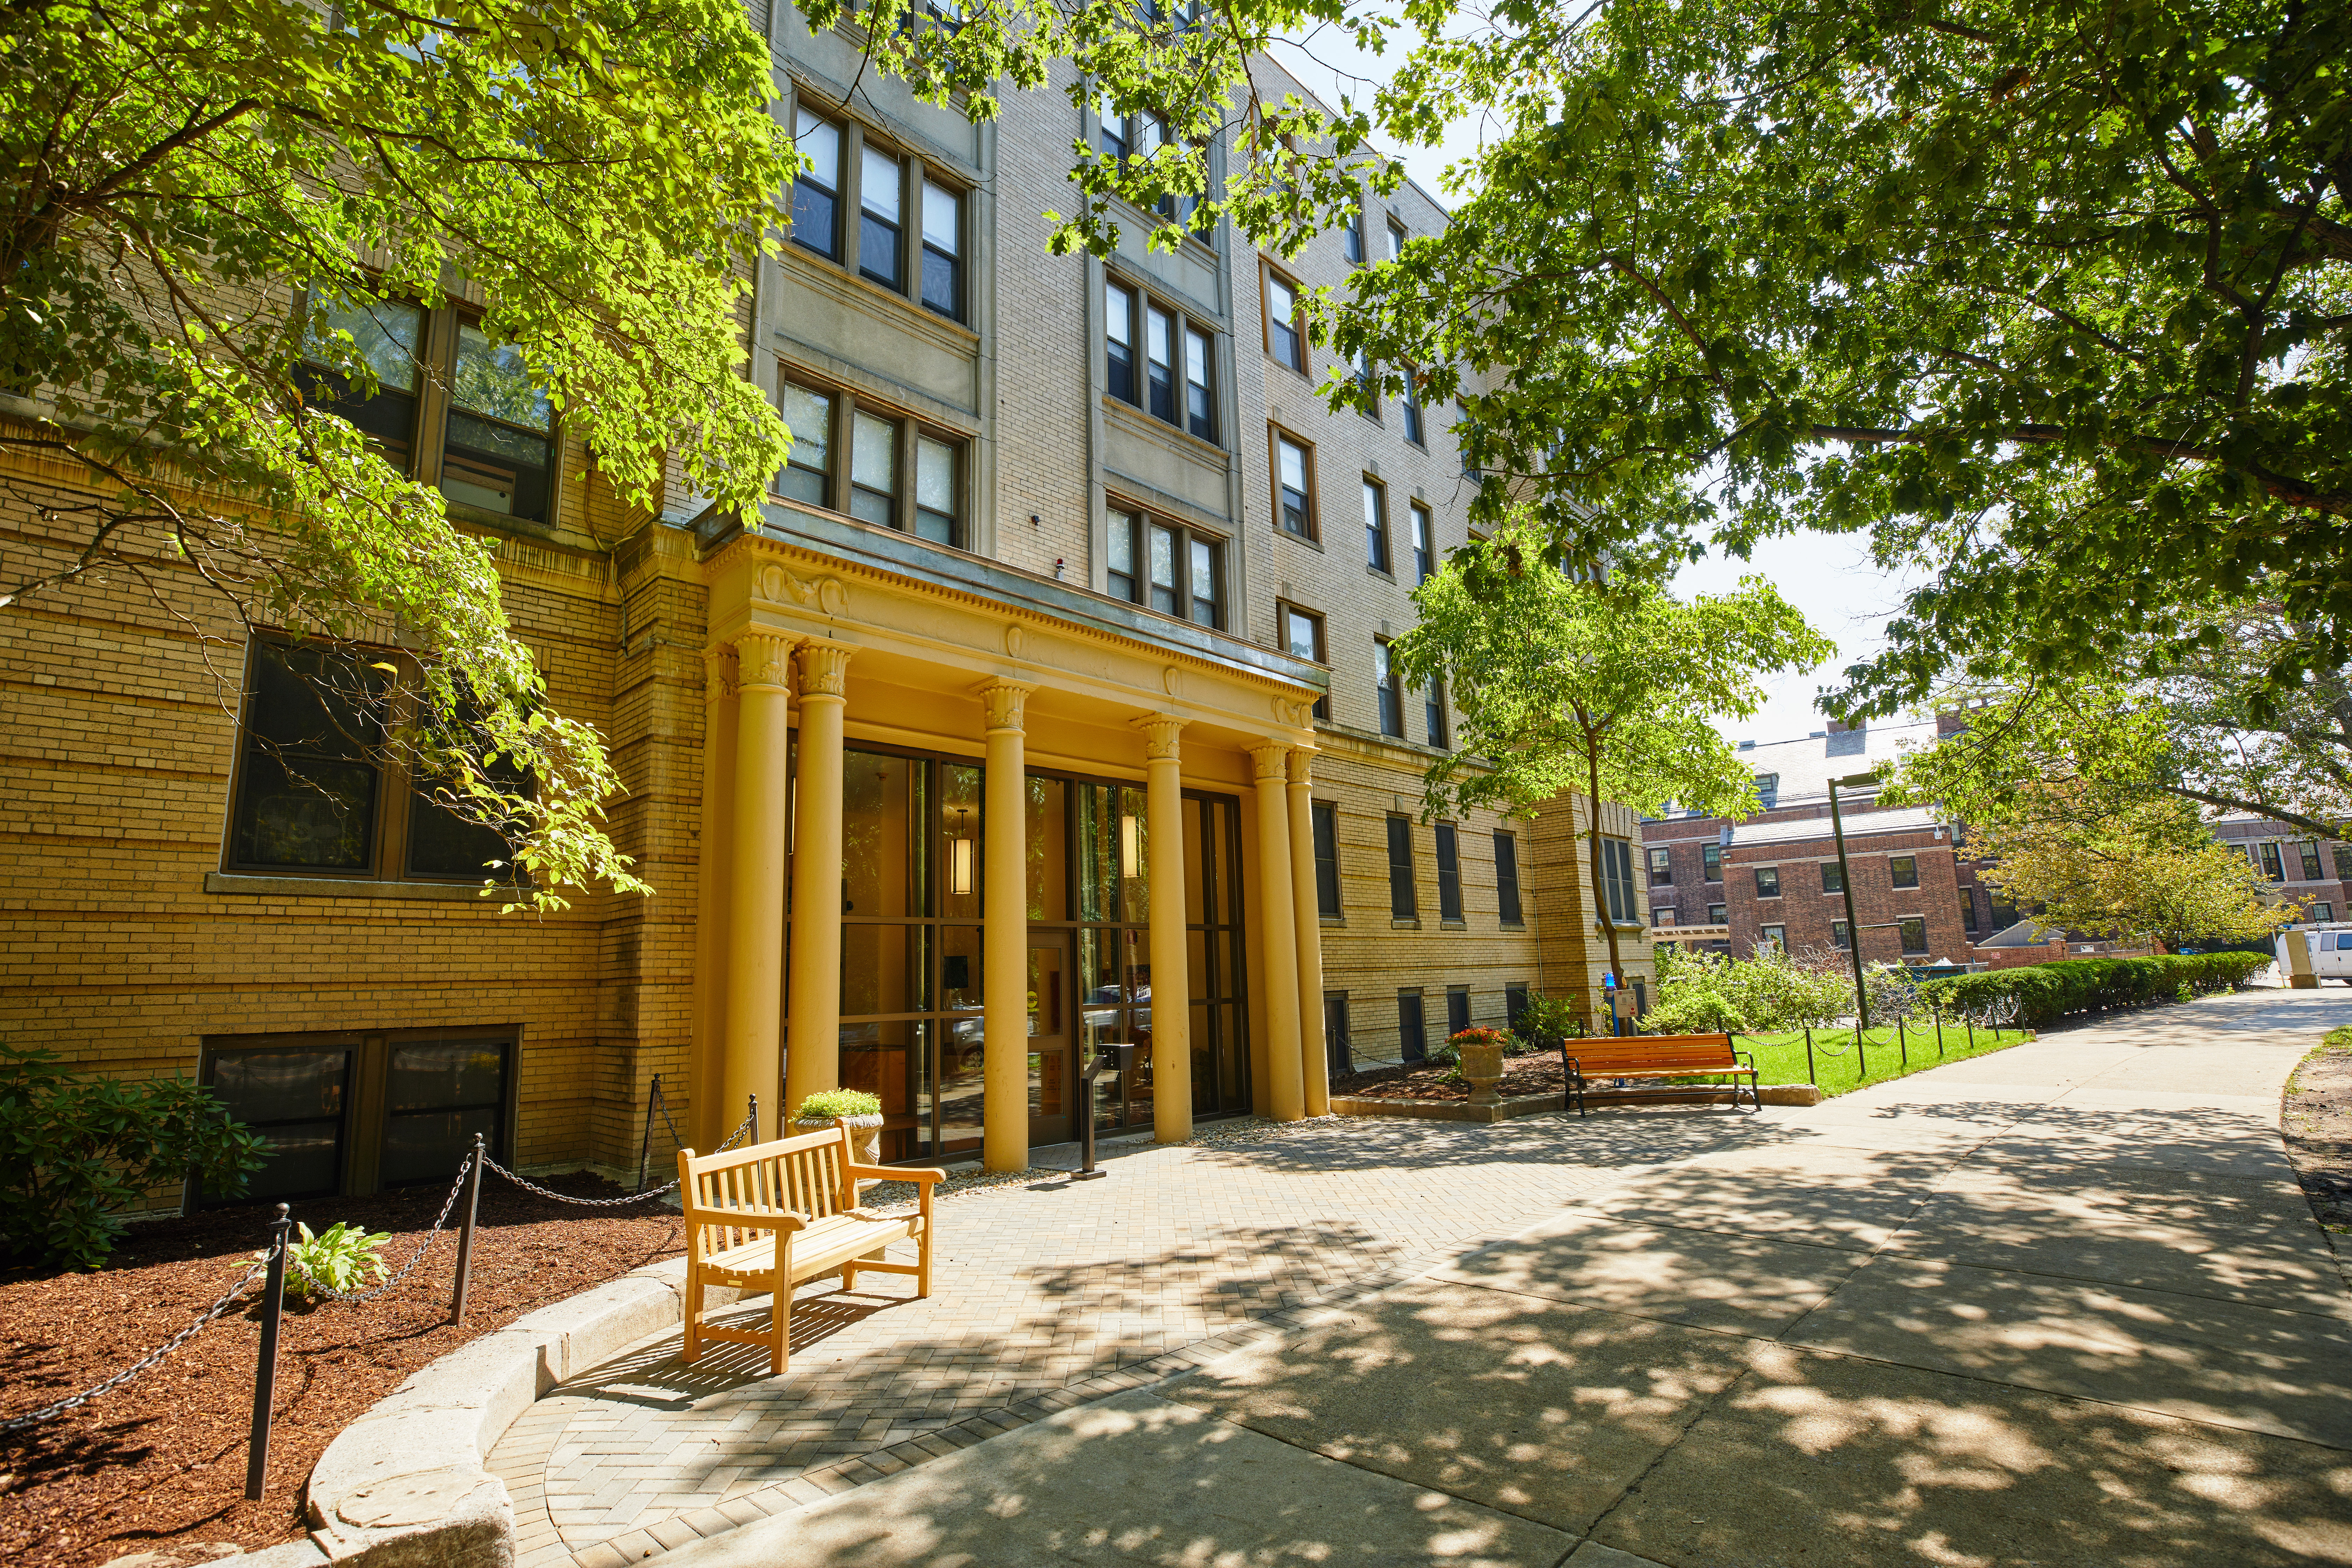 Ivy League Schools In Boston Massachusetts